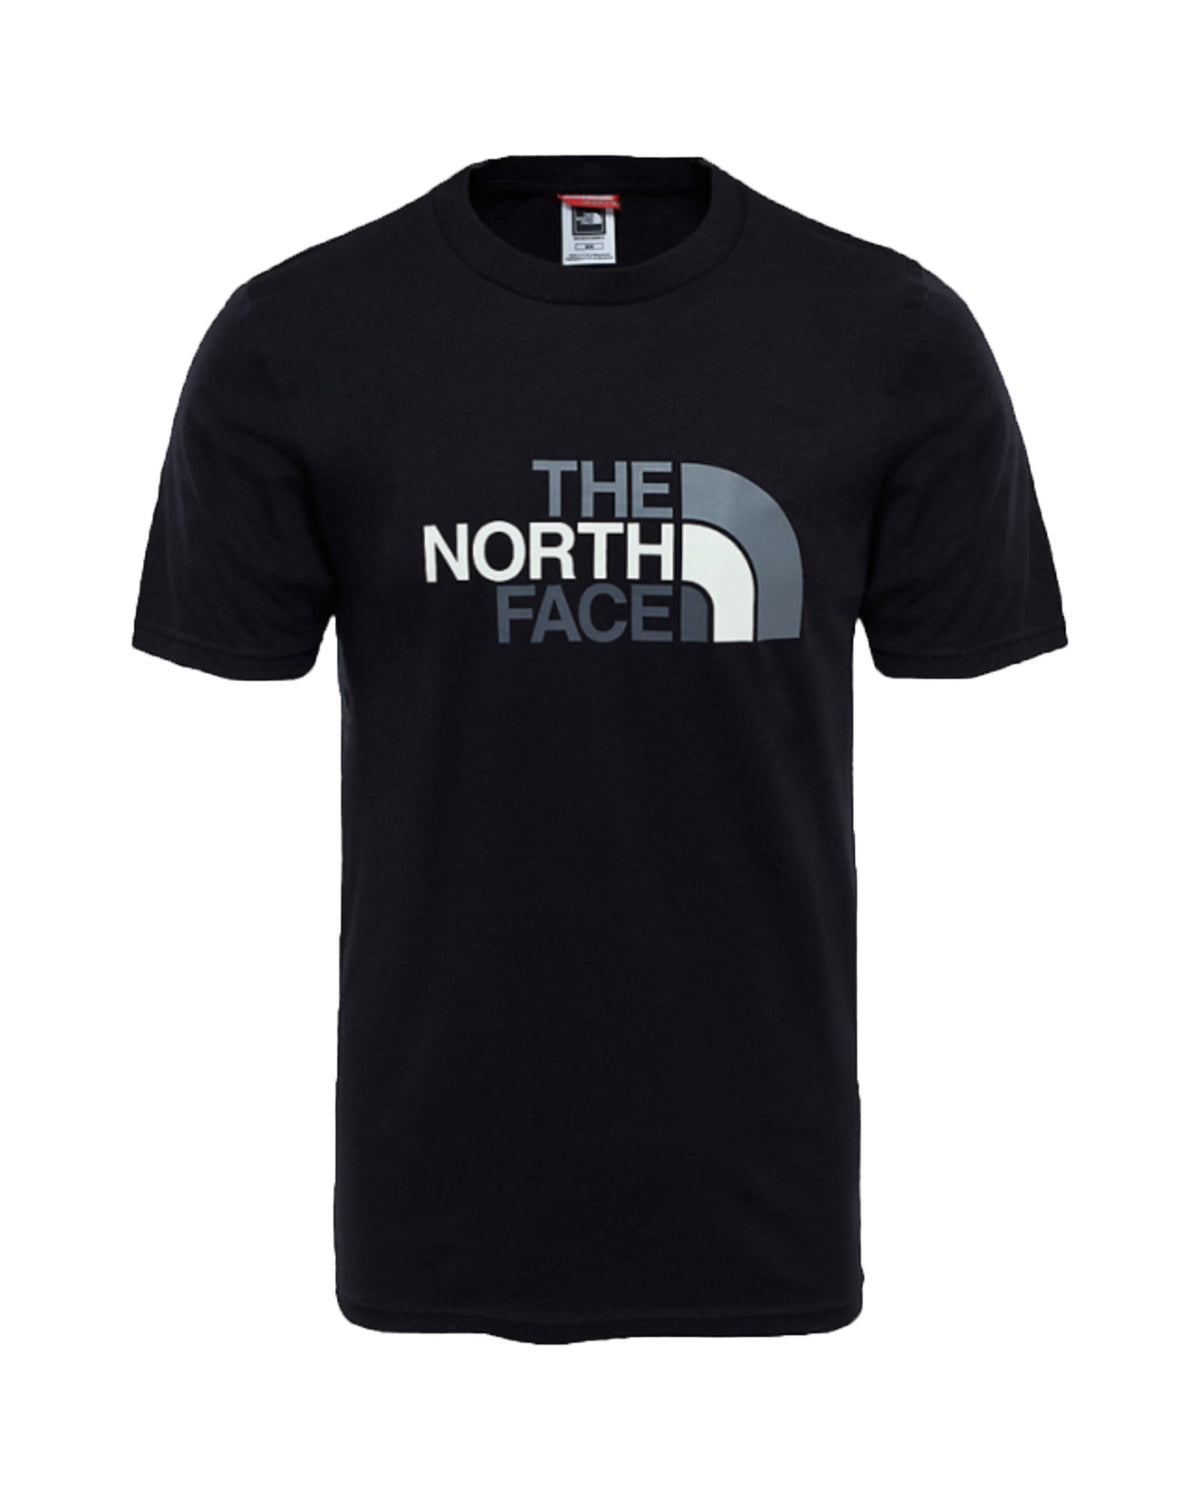 Man Tee The North Face Big Logo Black